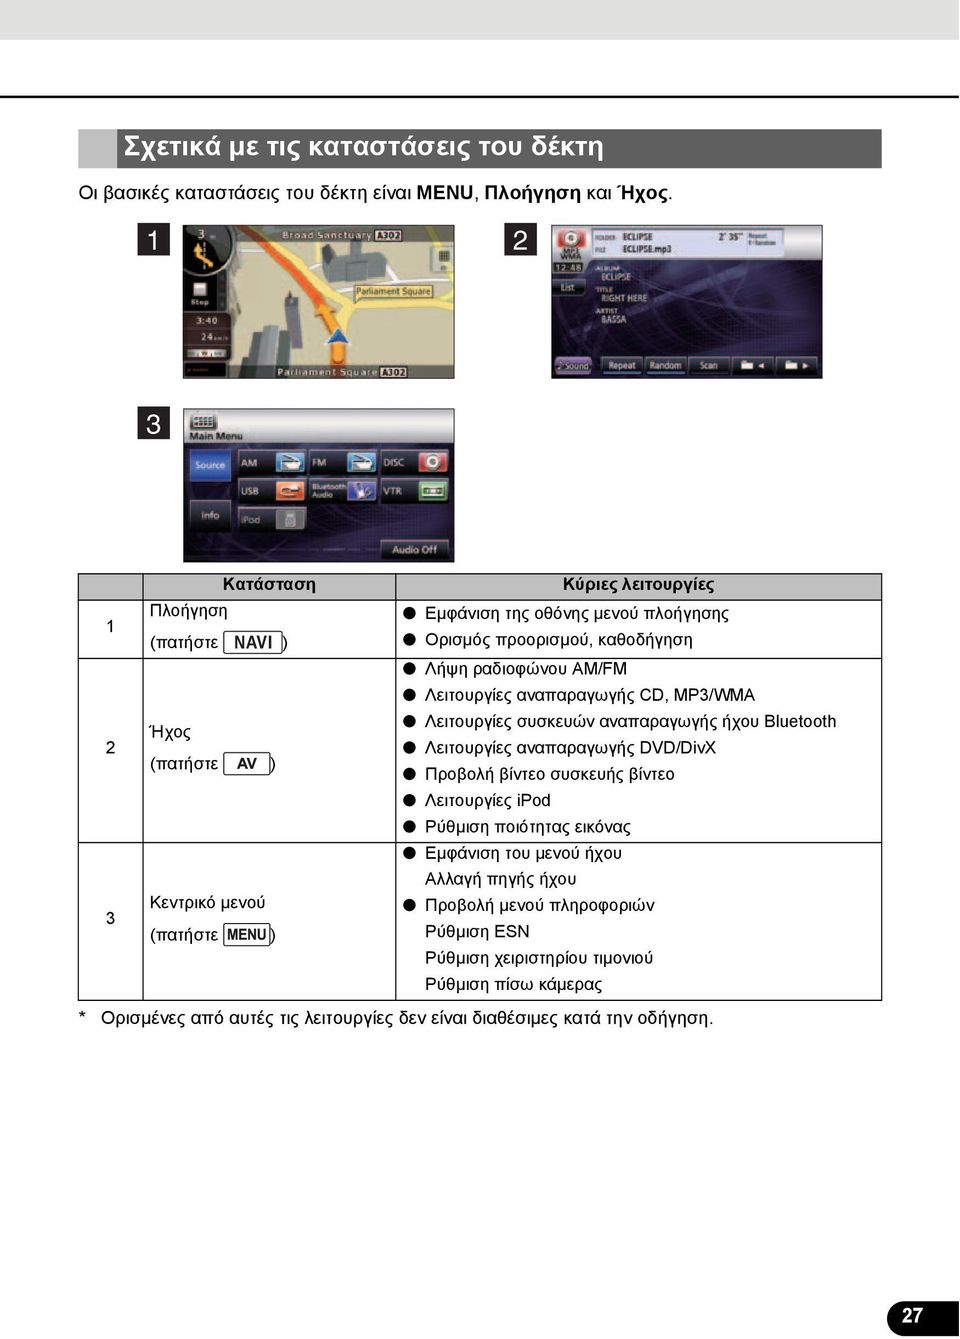 MP3/WMA Ήχος Λειτουργίες συσκευών αναπαραγωγής ήχου Bluetooth 2 Λειτουργίες αναπαραγωγής DVD/DivX (πατήστε ) Προβολή βίντεο συσκευής βίντεο Λειτουργίες ipod Ρύθμιση